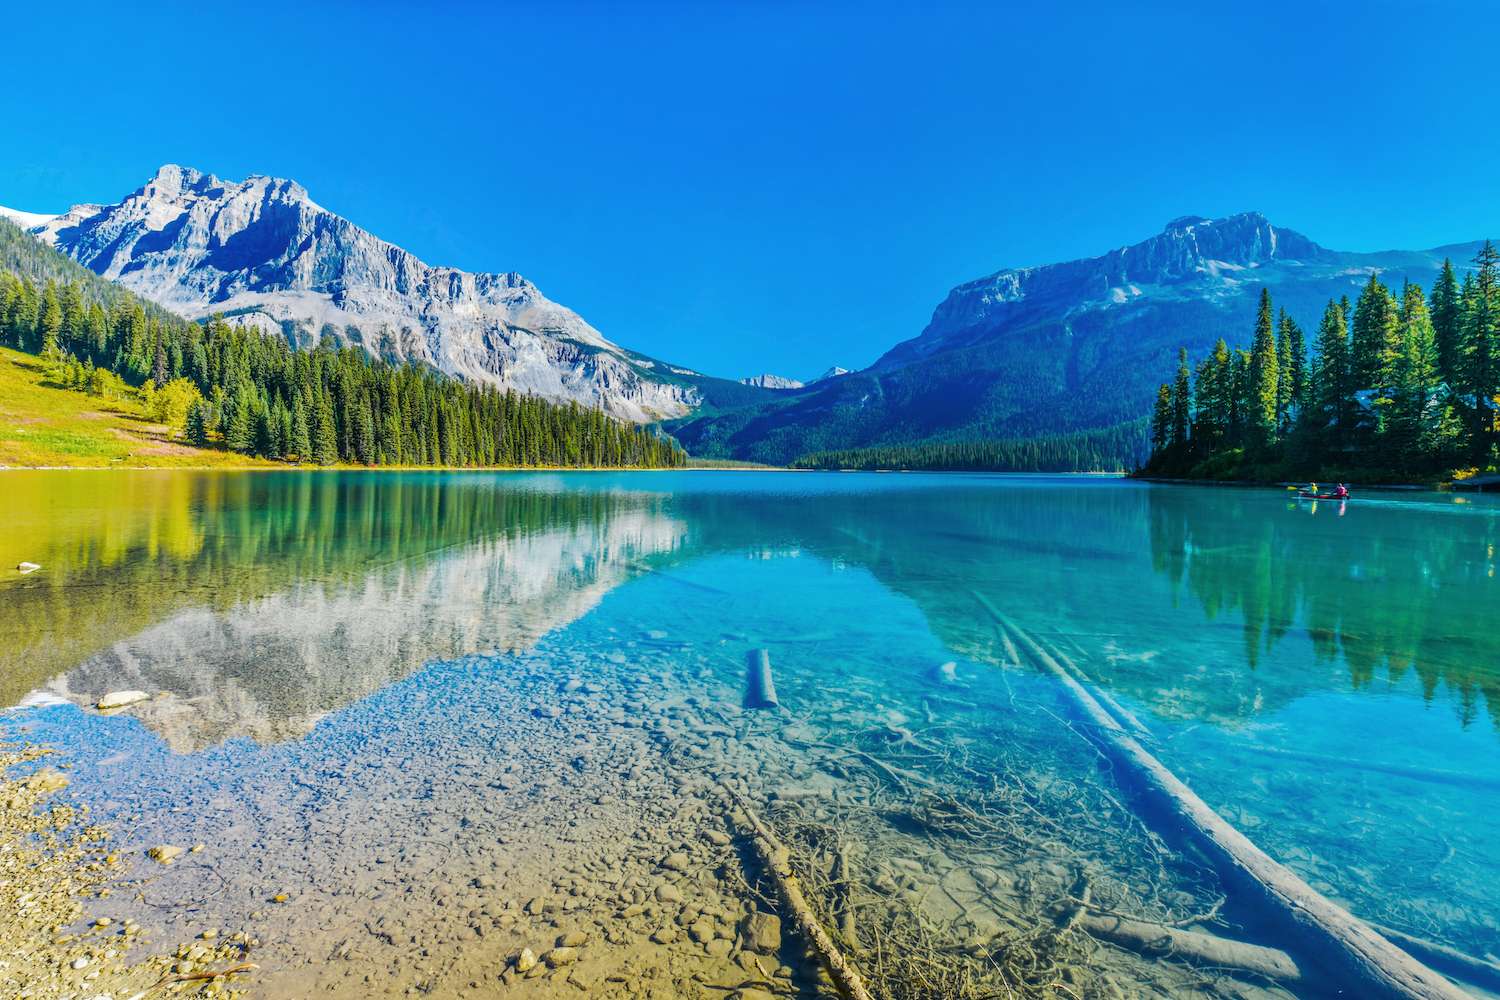 Emerald Lake,Yoho National Park in Canada.